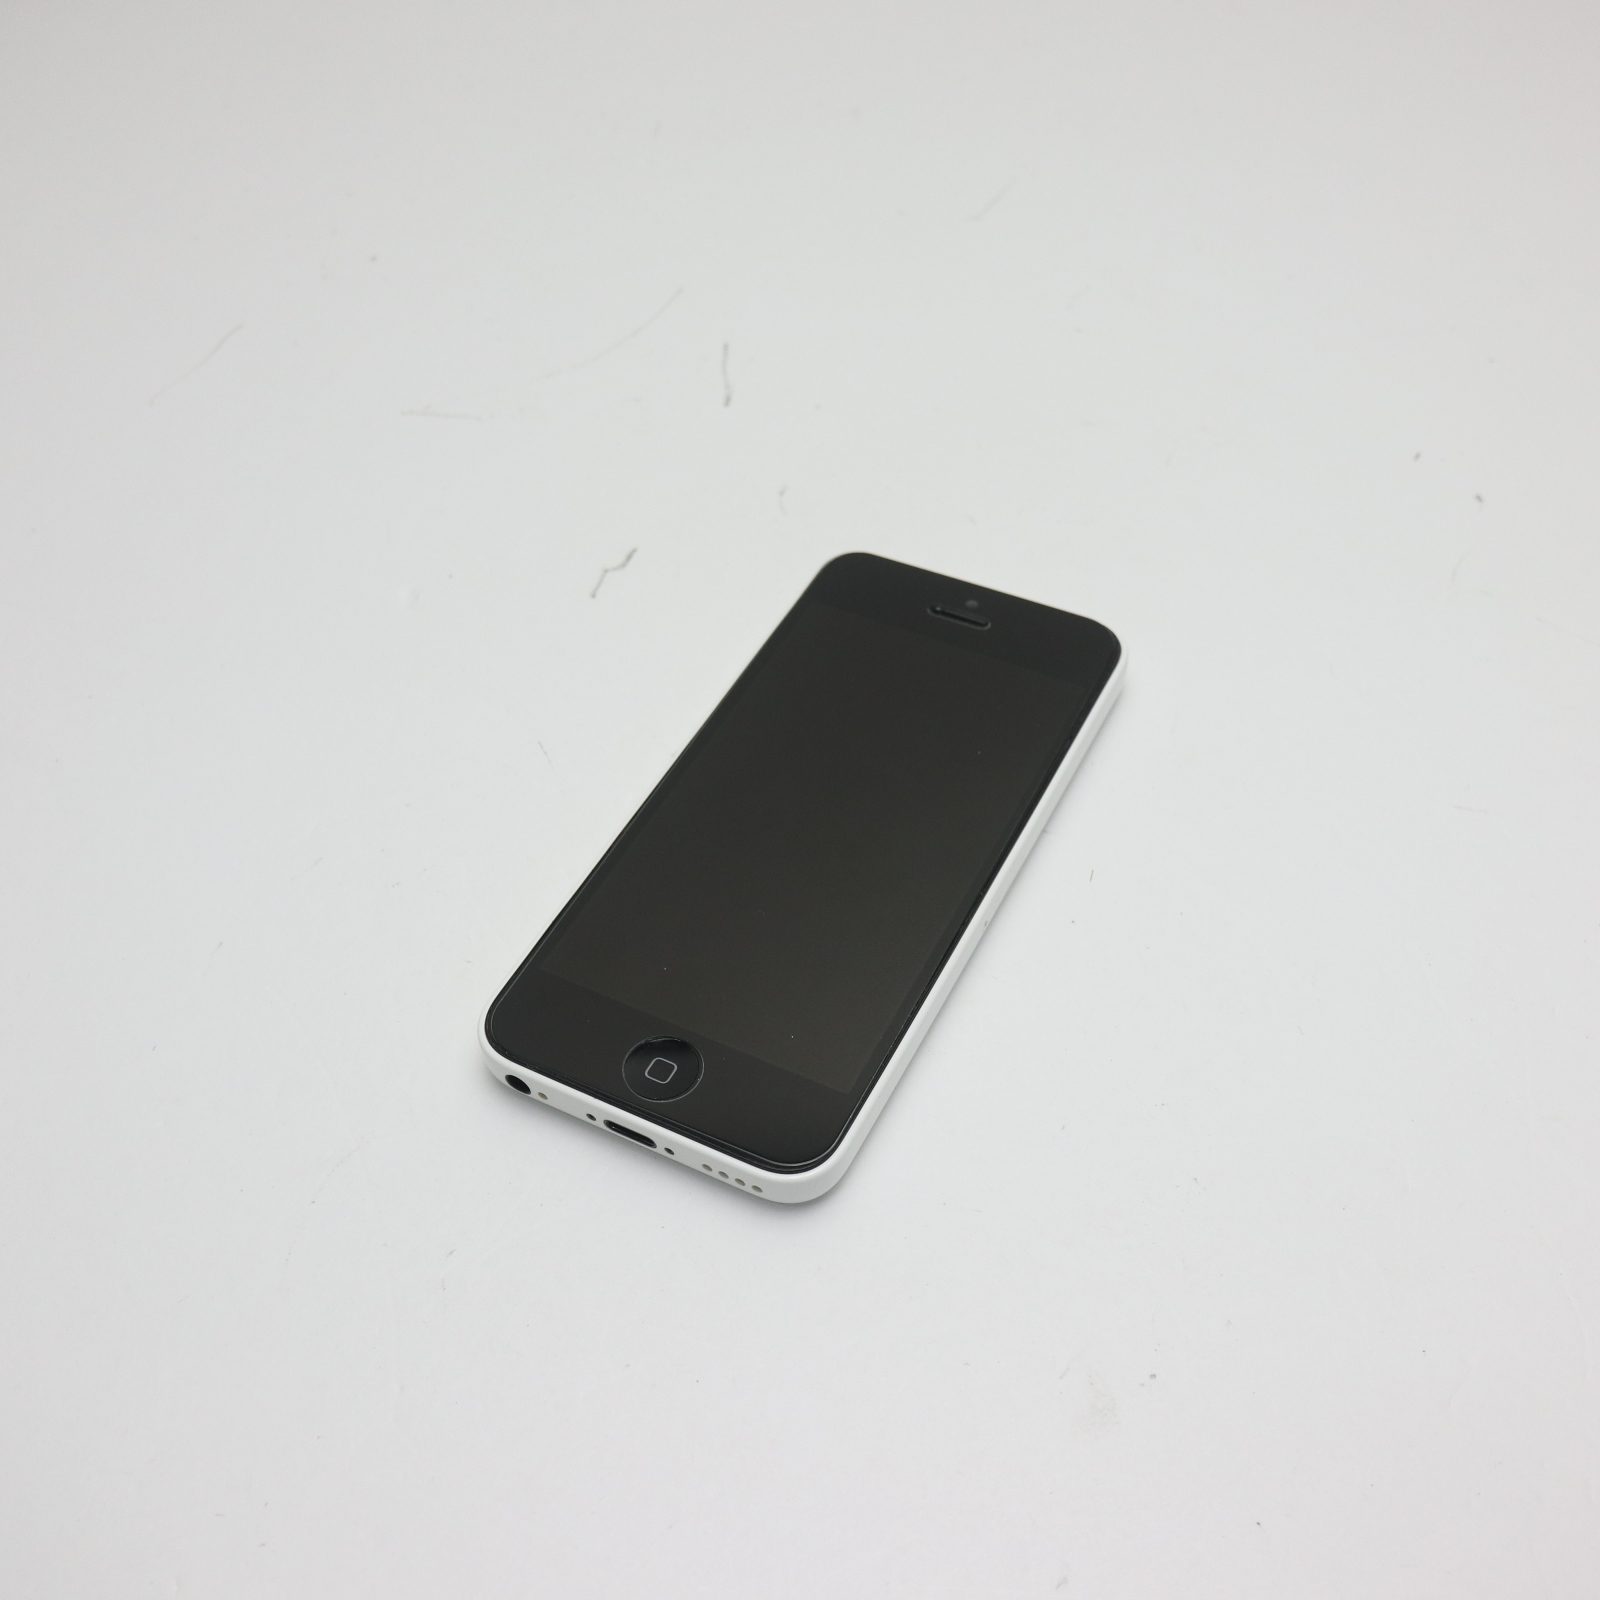 Apple iPhone 5c 32GB ホワイト ソフトバンク iPhone iPhone 5c iPhone本体の商品画像